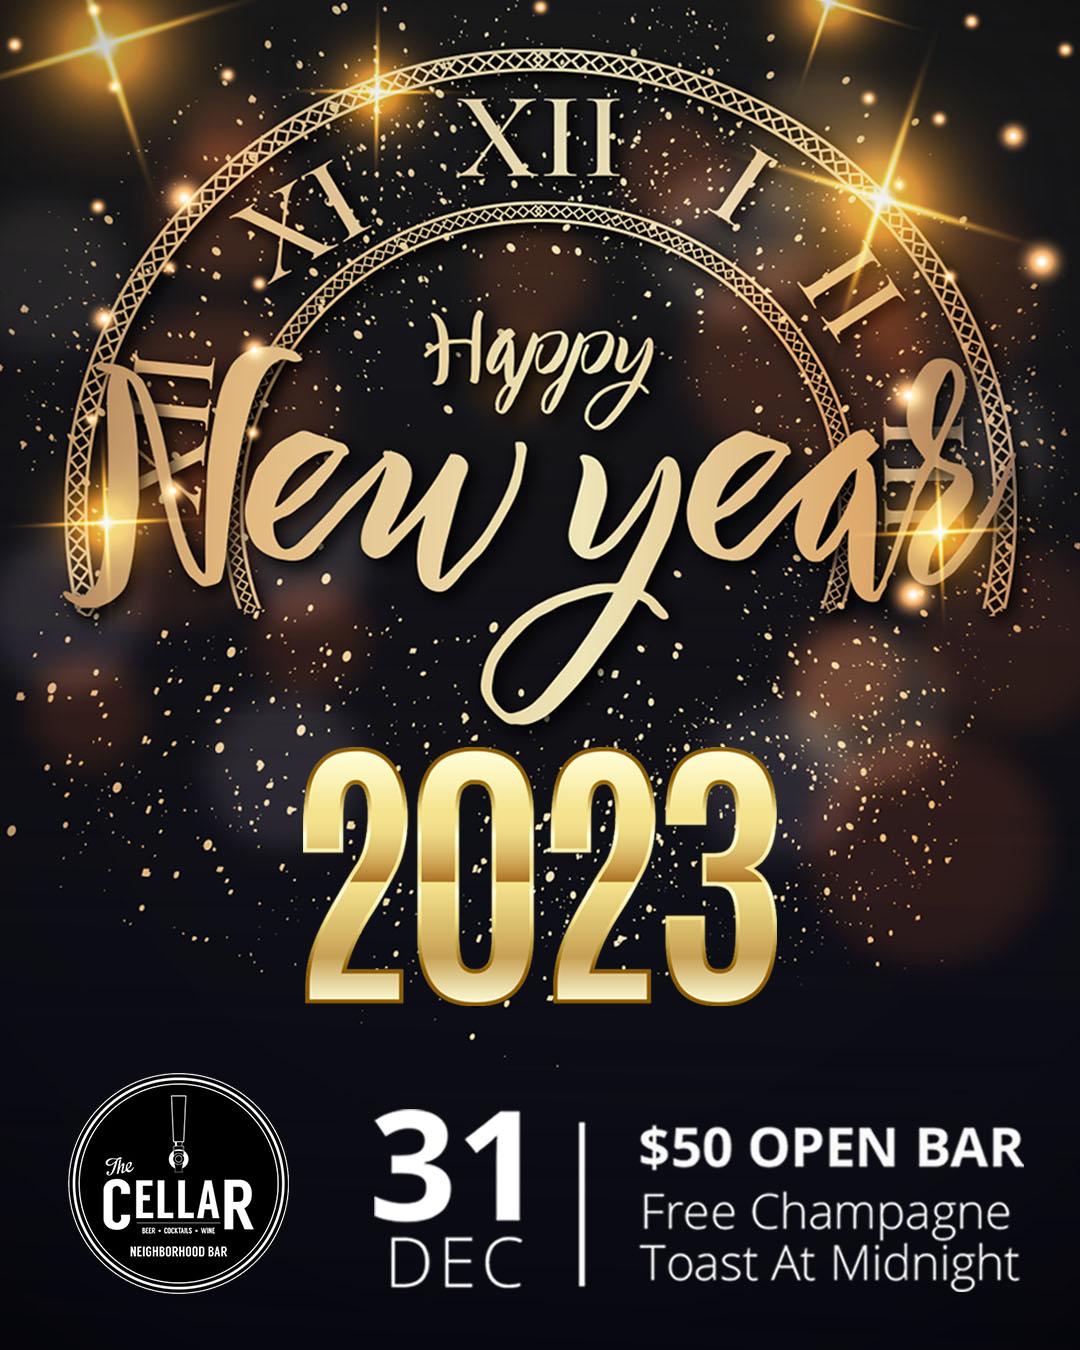 NYE Houston Bar 2023 50 Open Bar No Cover The Cellar Bar